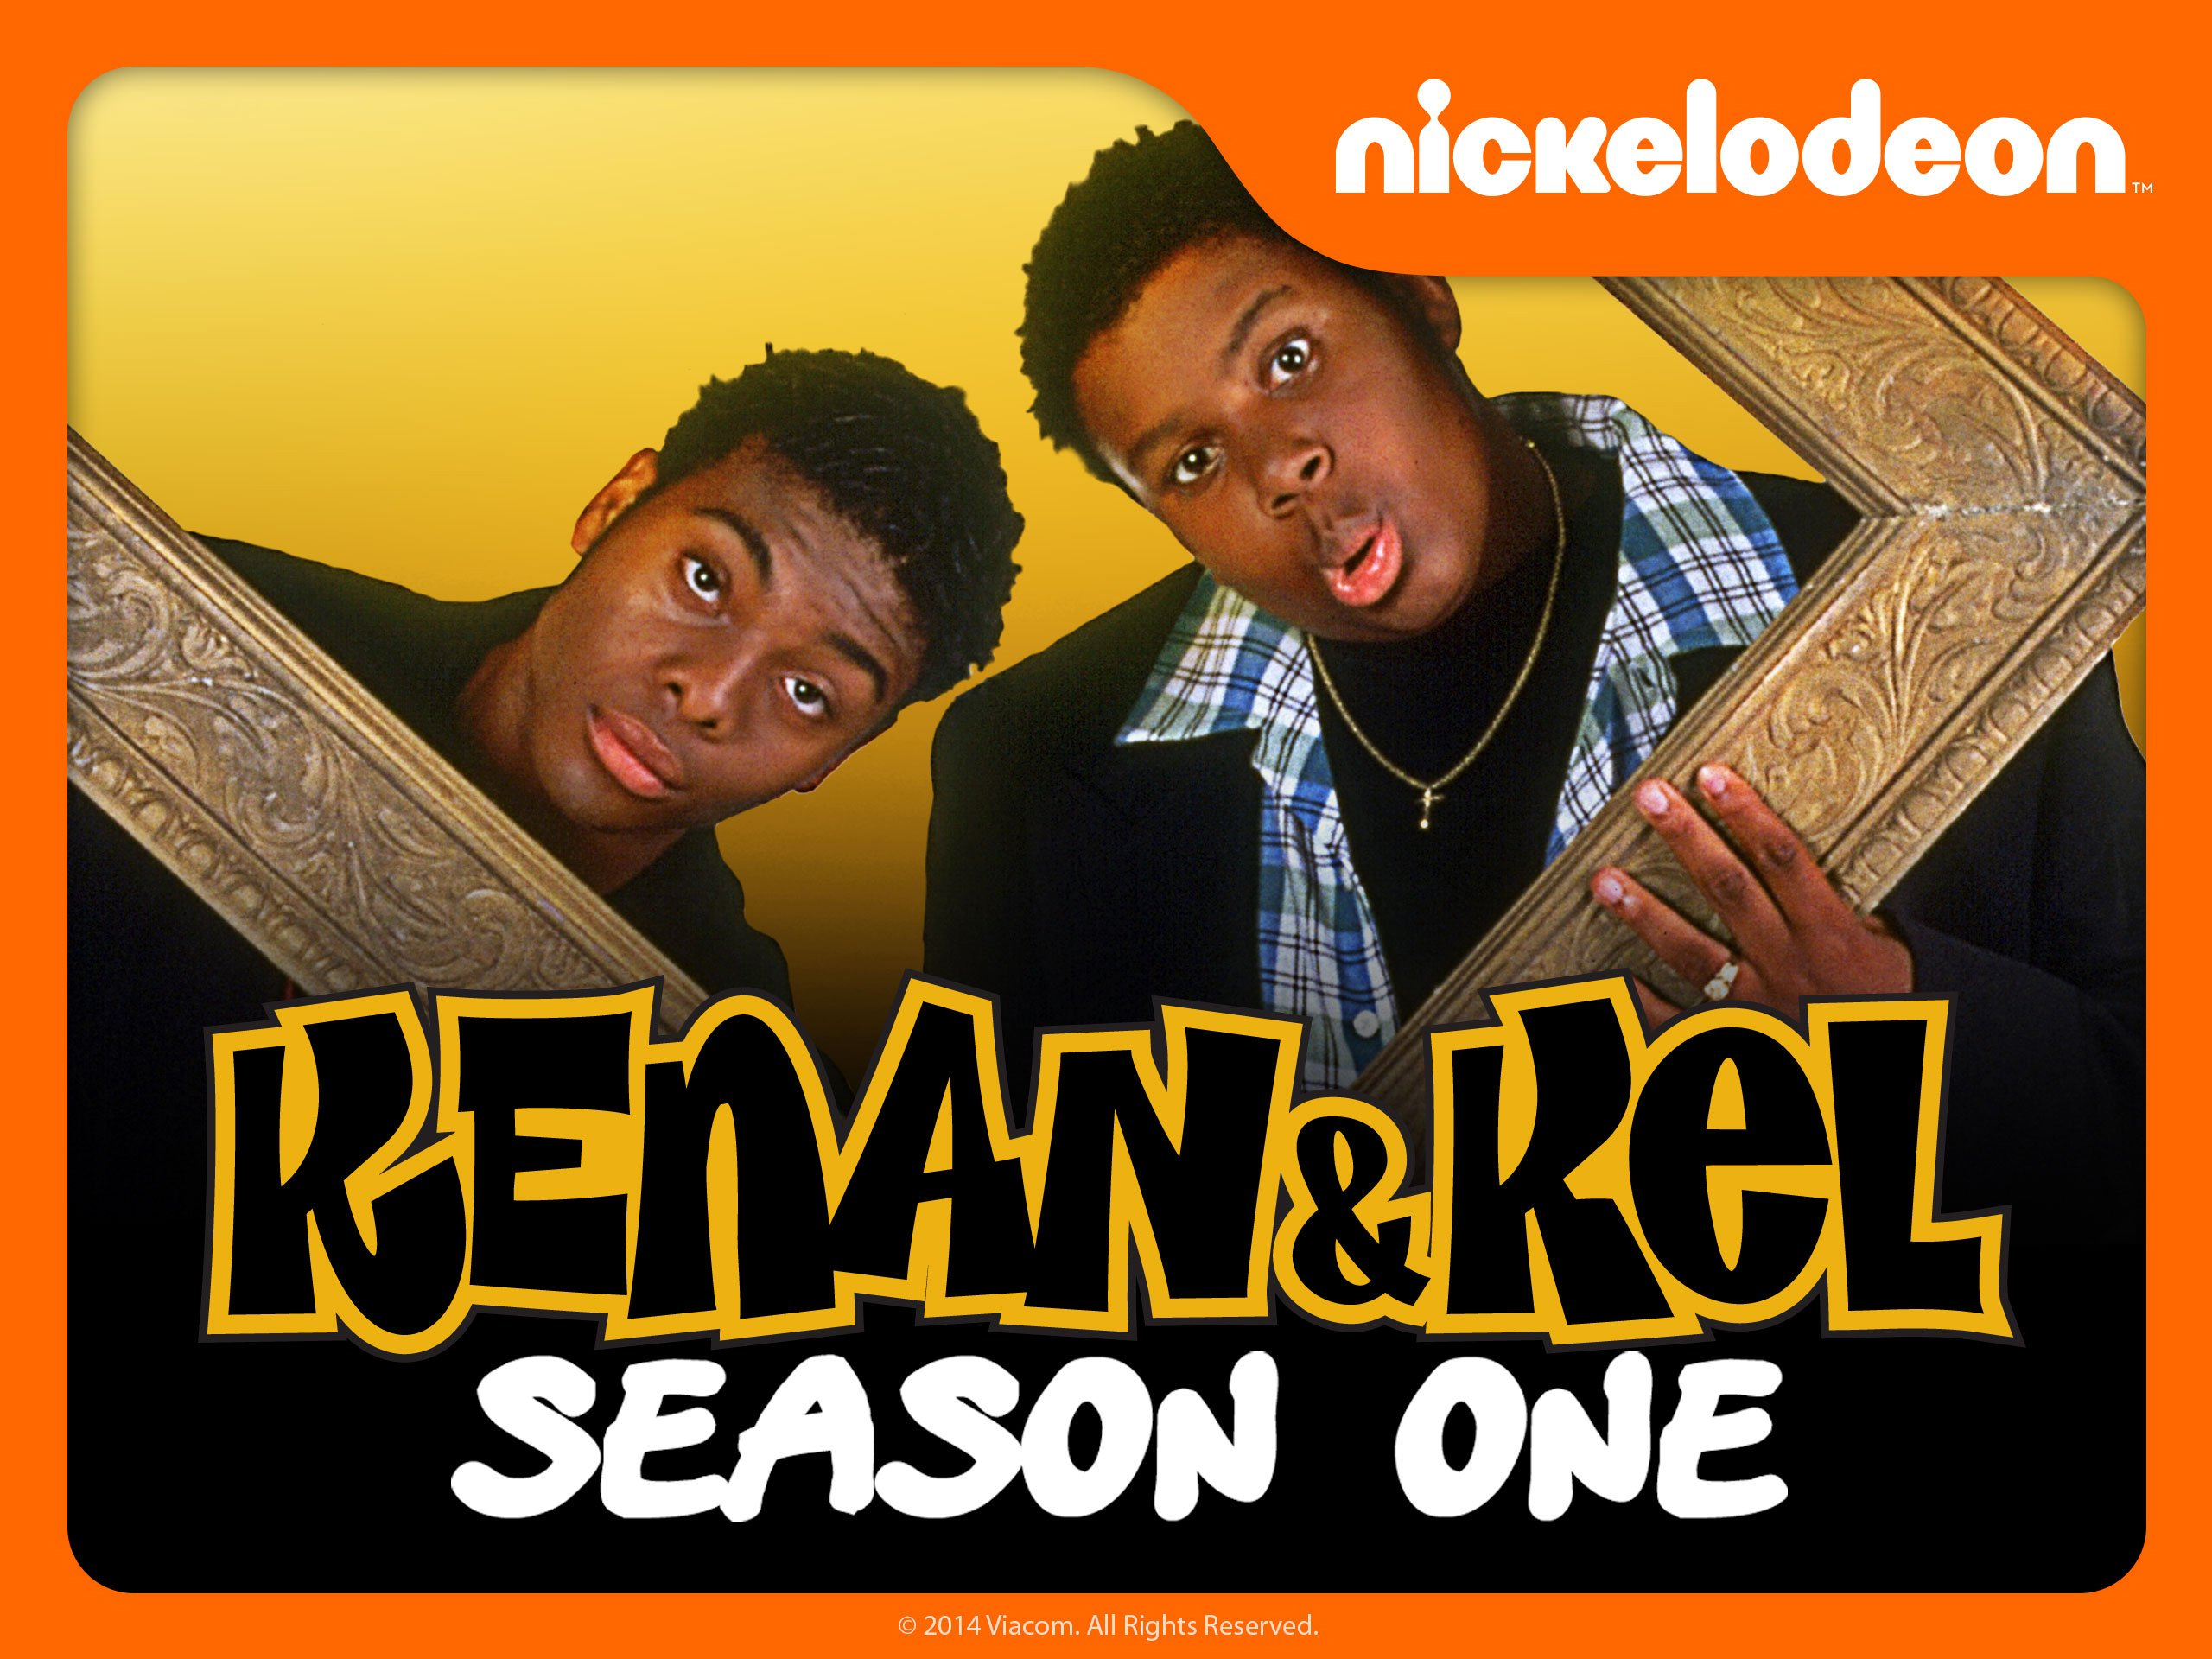 Kenan and Kel Poster - Season 1